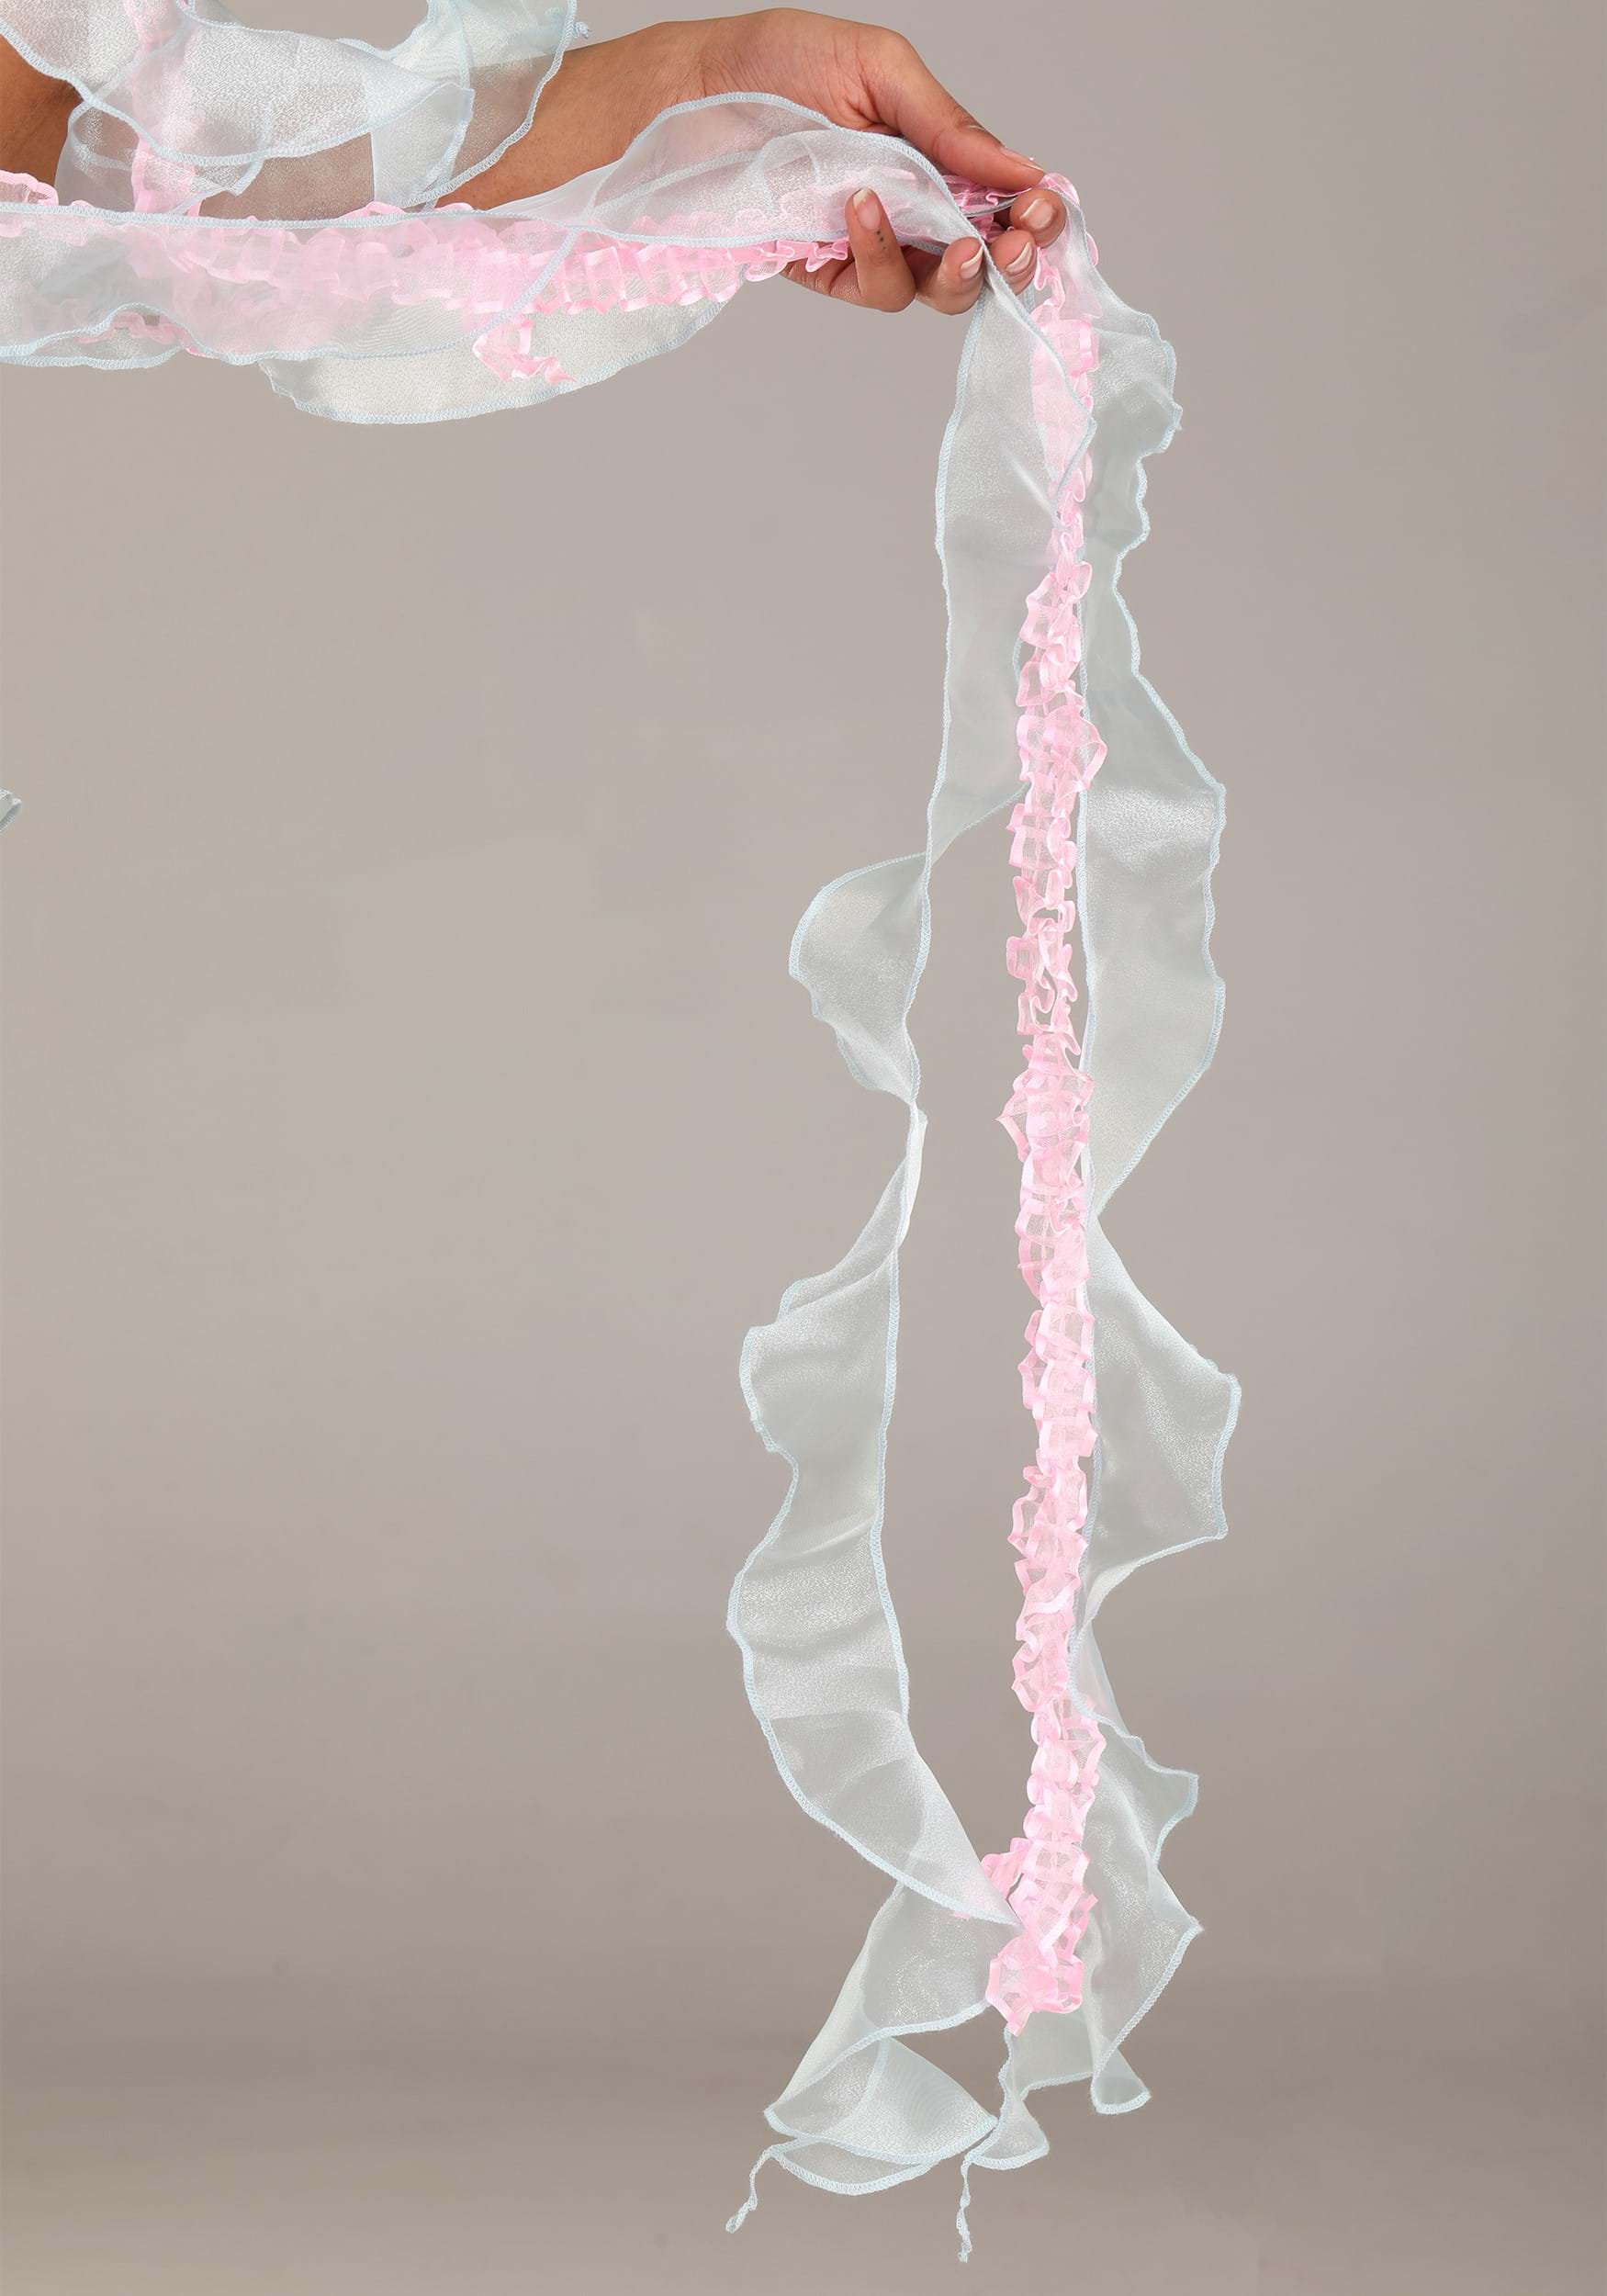 Light Up Jellyfish Costume Headpiece - One Size